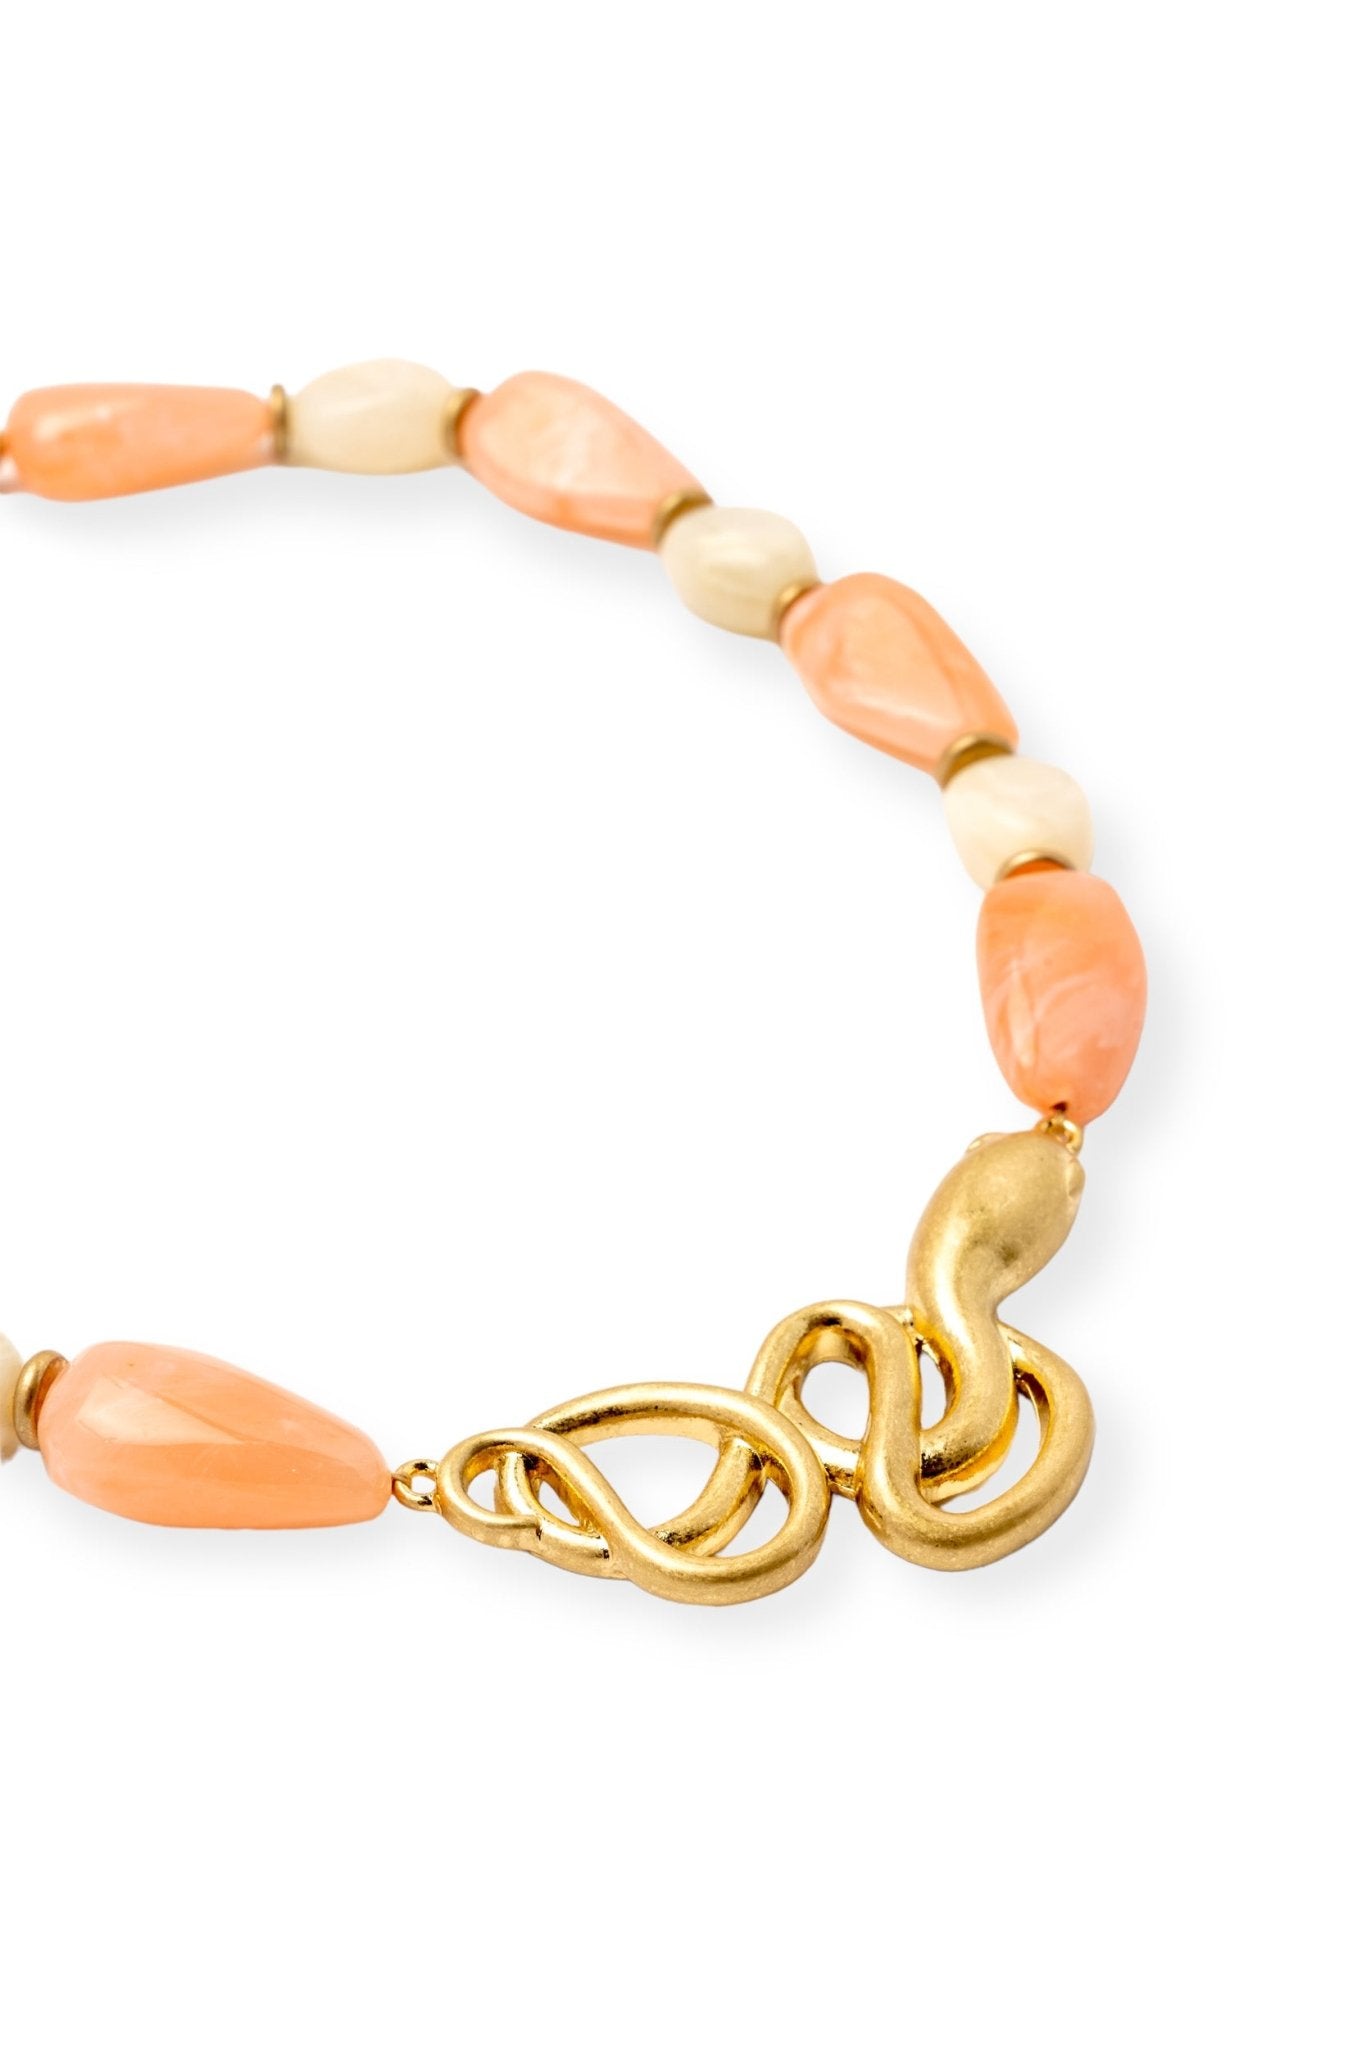 collana-girocollo-bianca-arancio-con-serpente-2-Mya Accessories